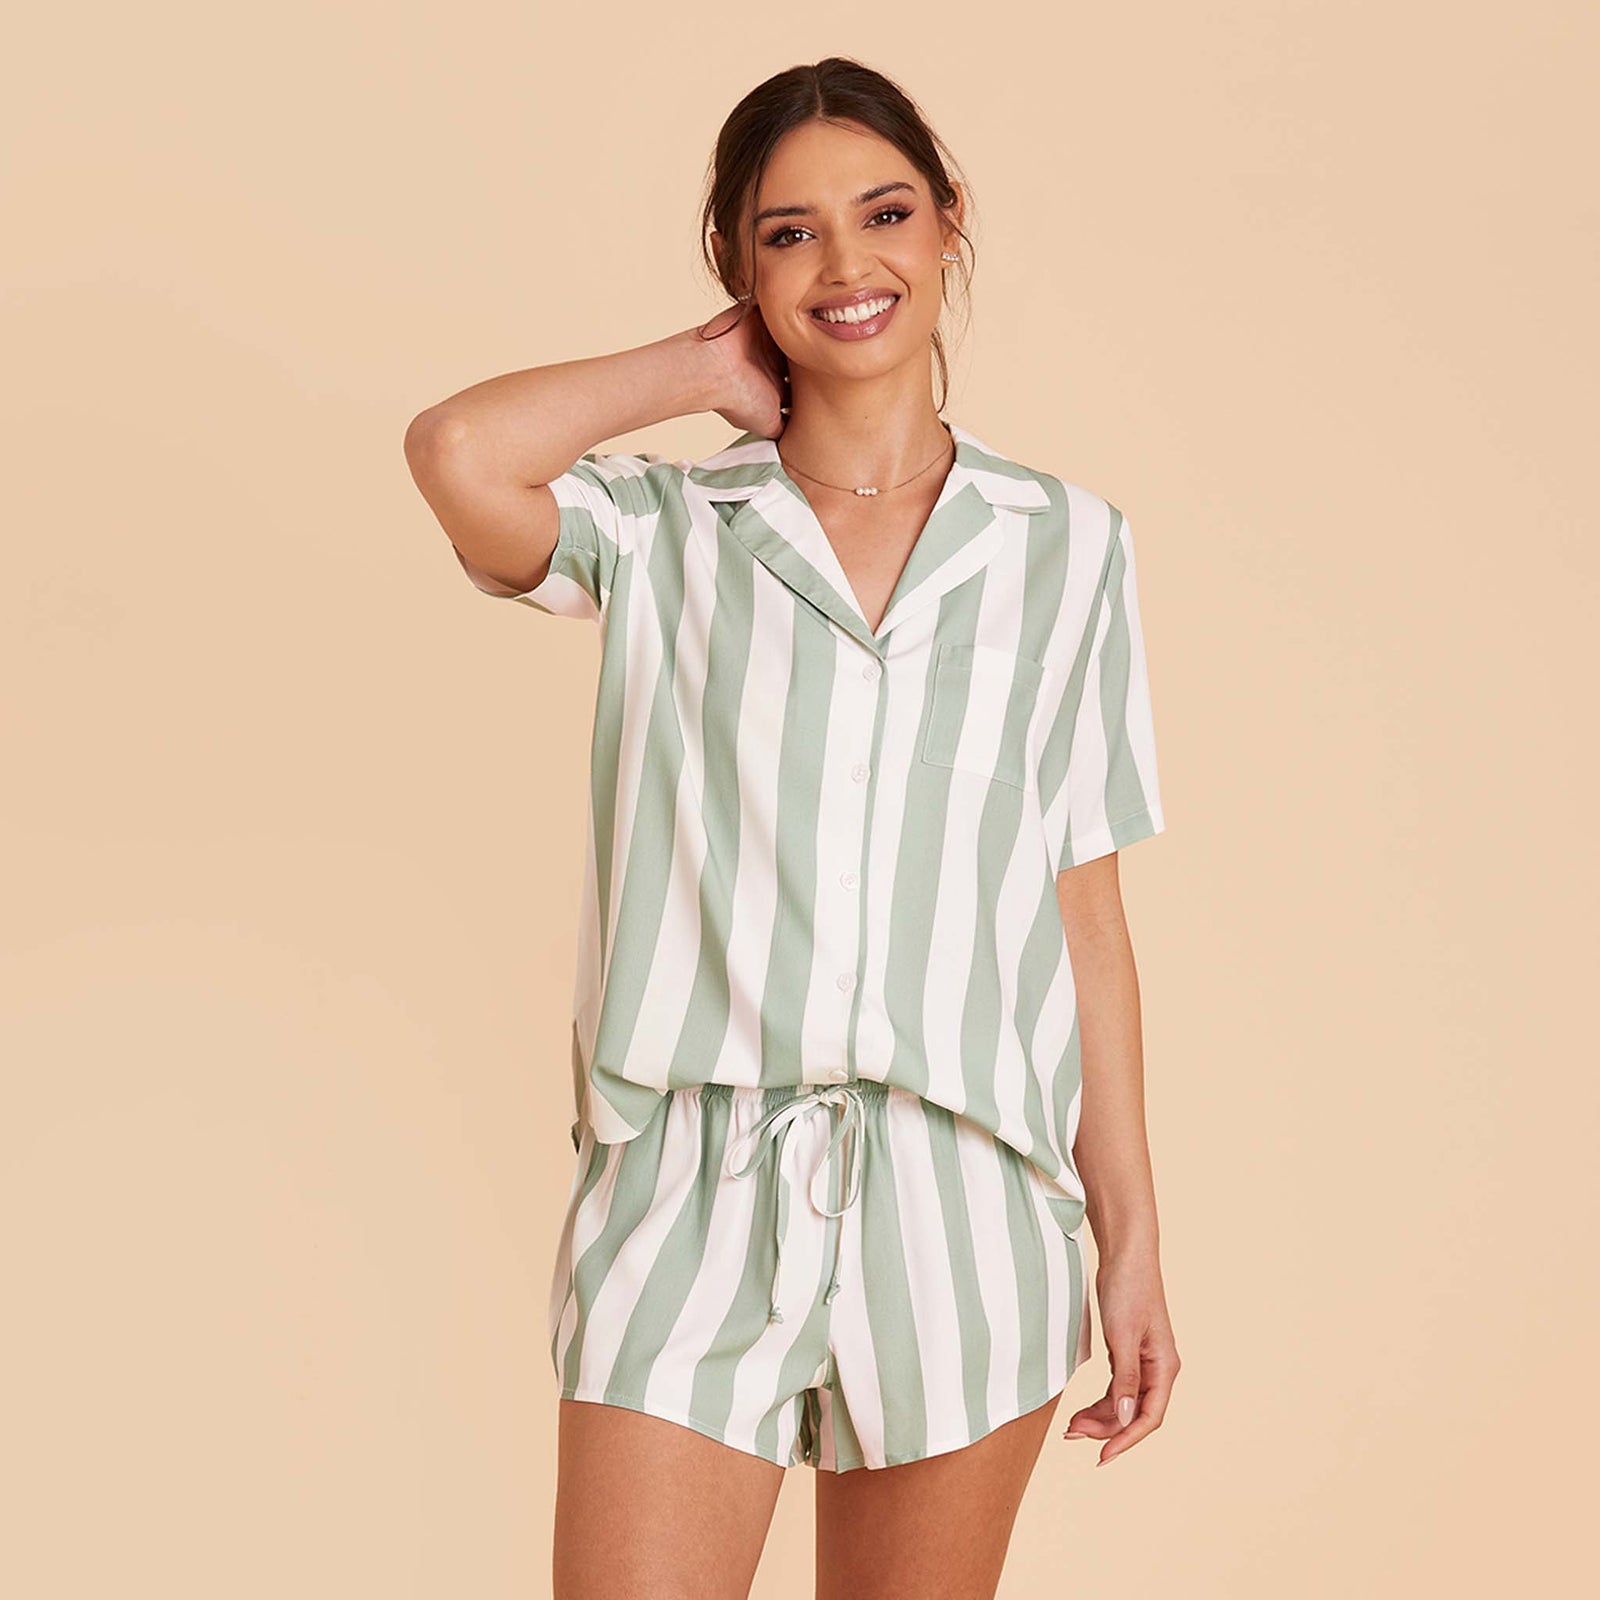 Short Sleeve Personalized Pajamas - Elegant Satin Pajama Set